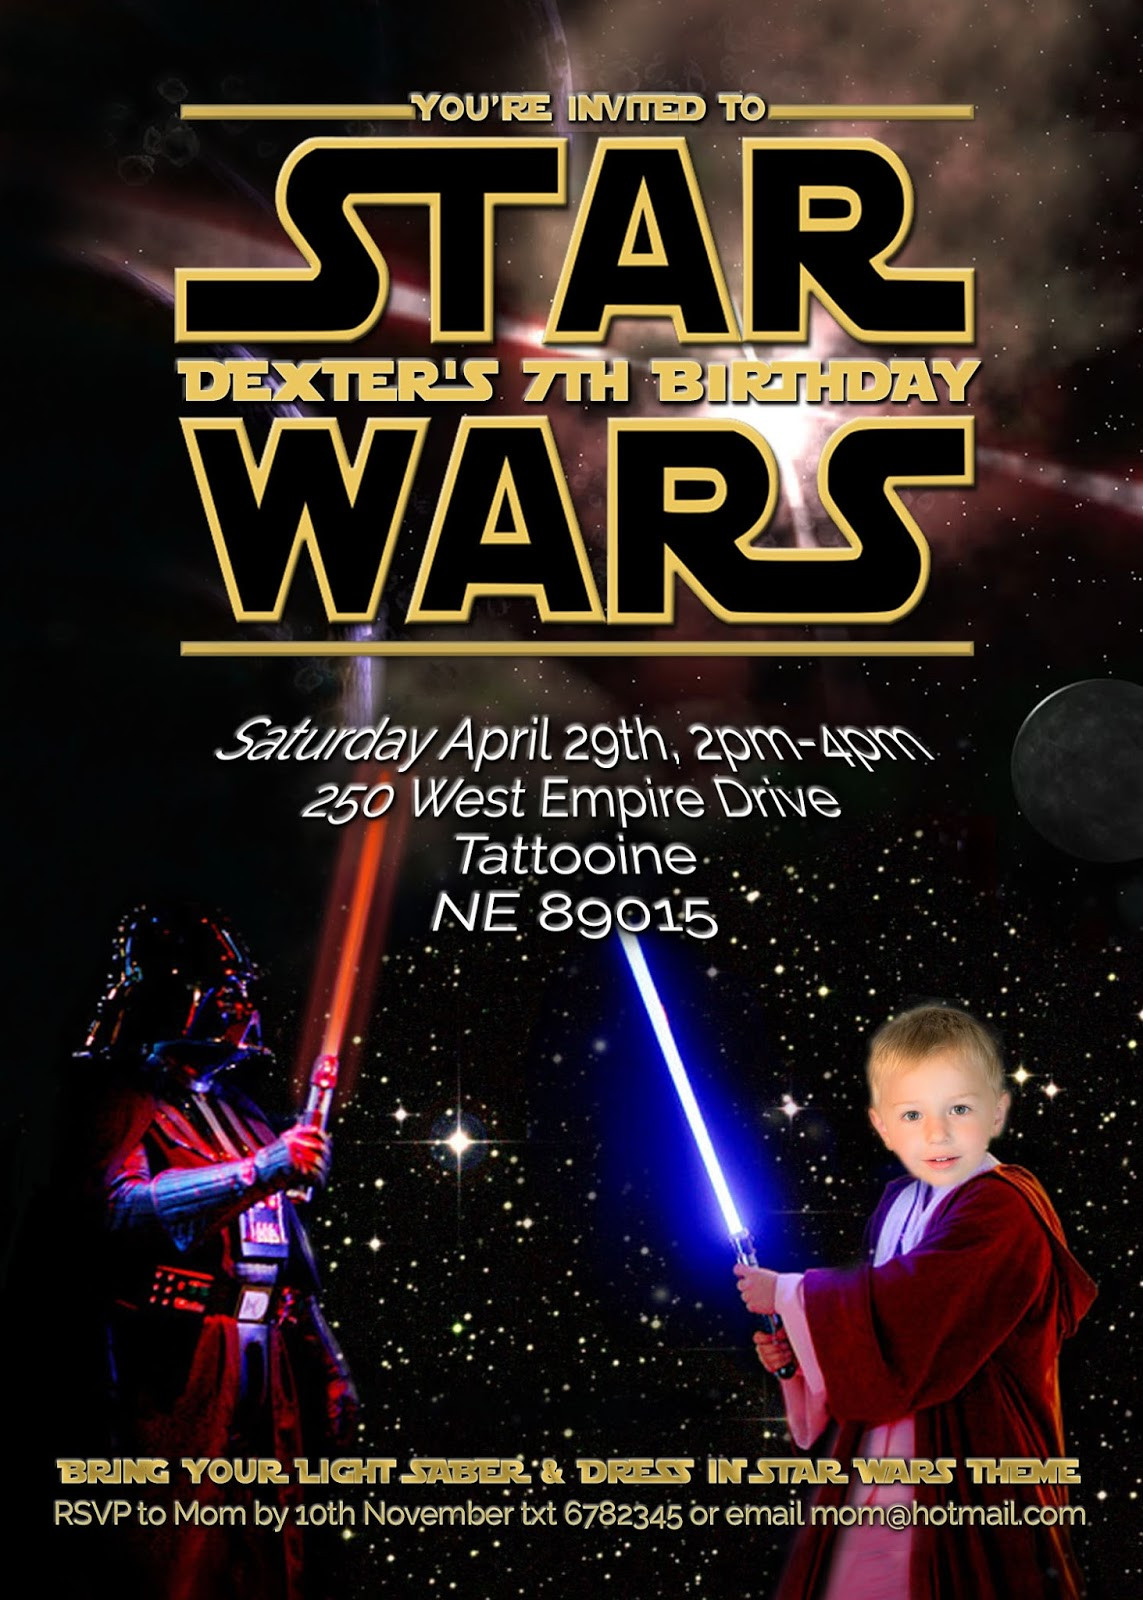 Star Wars Birthday Party Invitation
 FREE Kids Party Invitations Star Wars Party Invitation